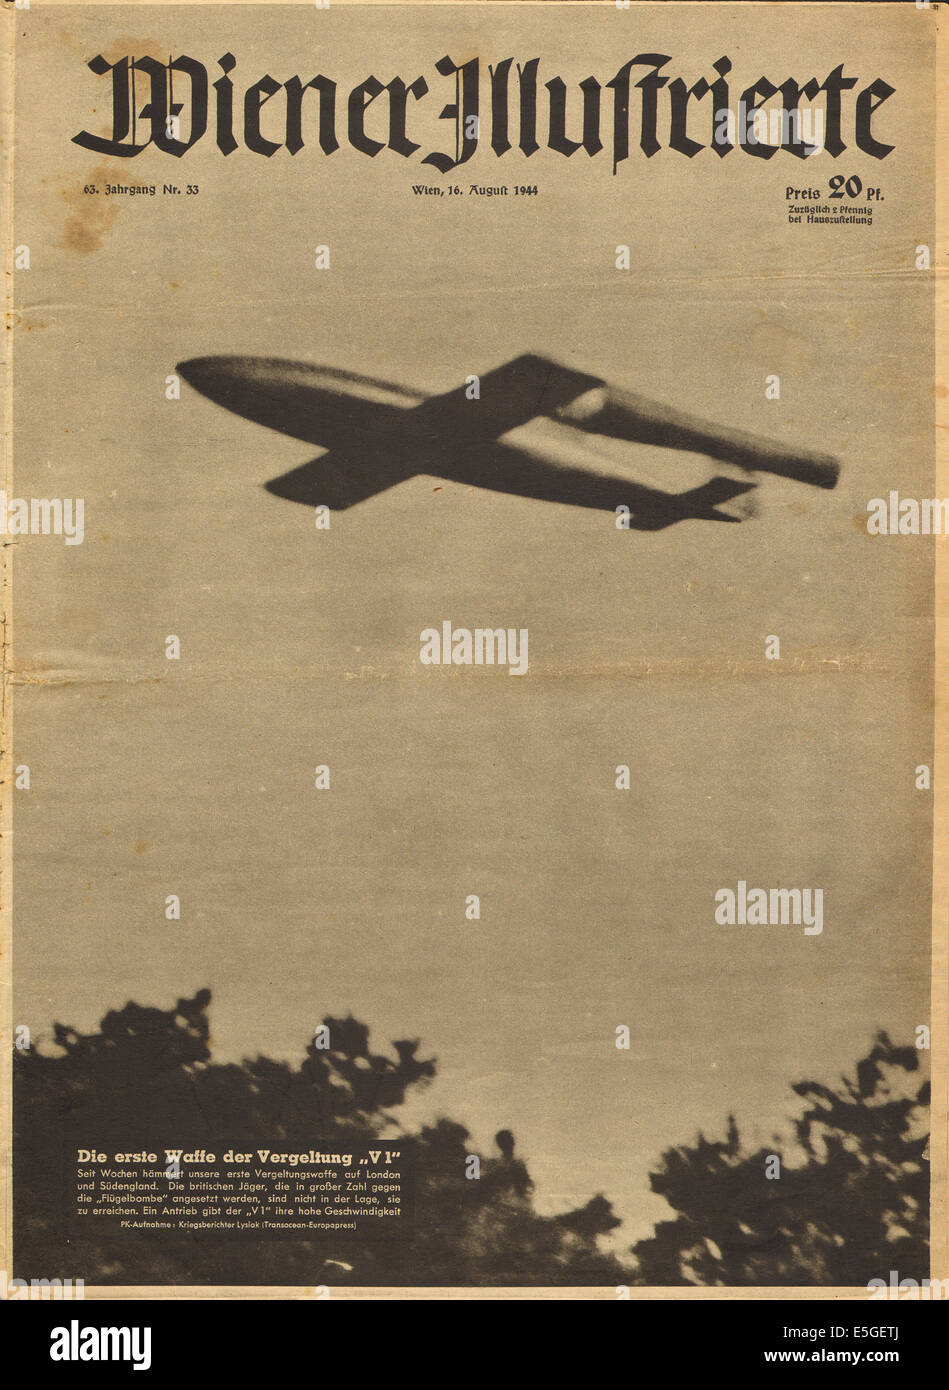 1944 Wiener Illustrierte front page showing a V1 rocket in flight Stock Photo